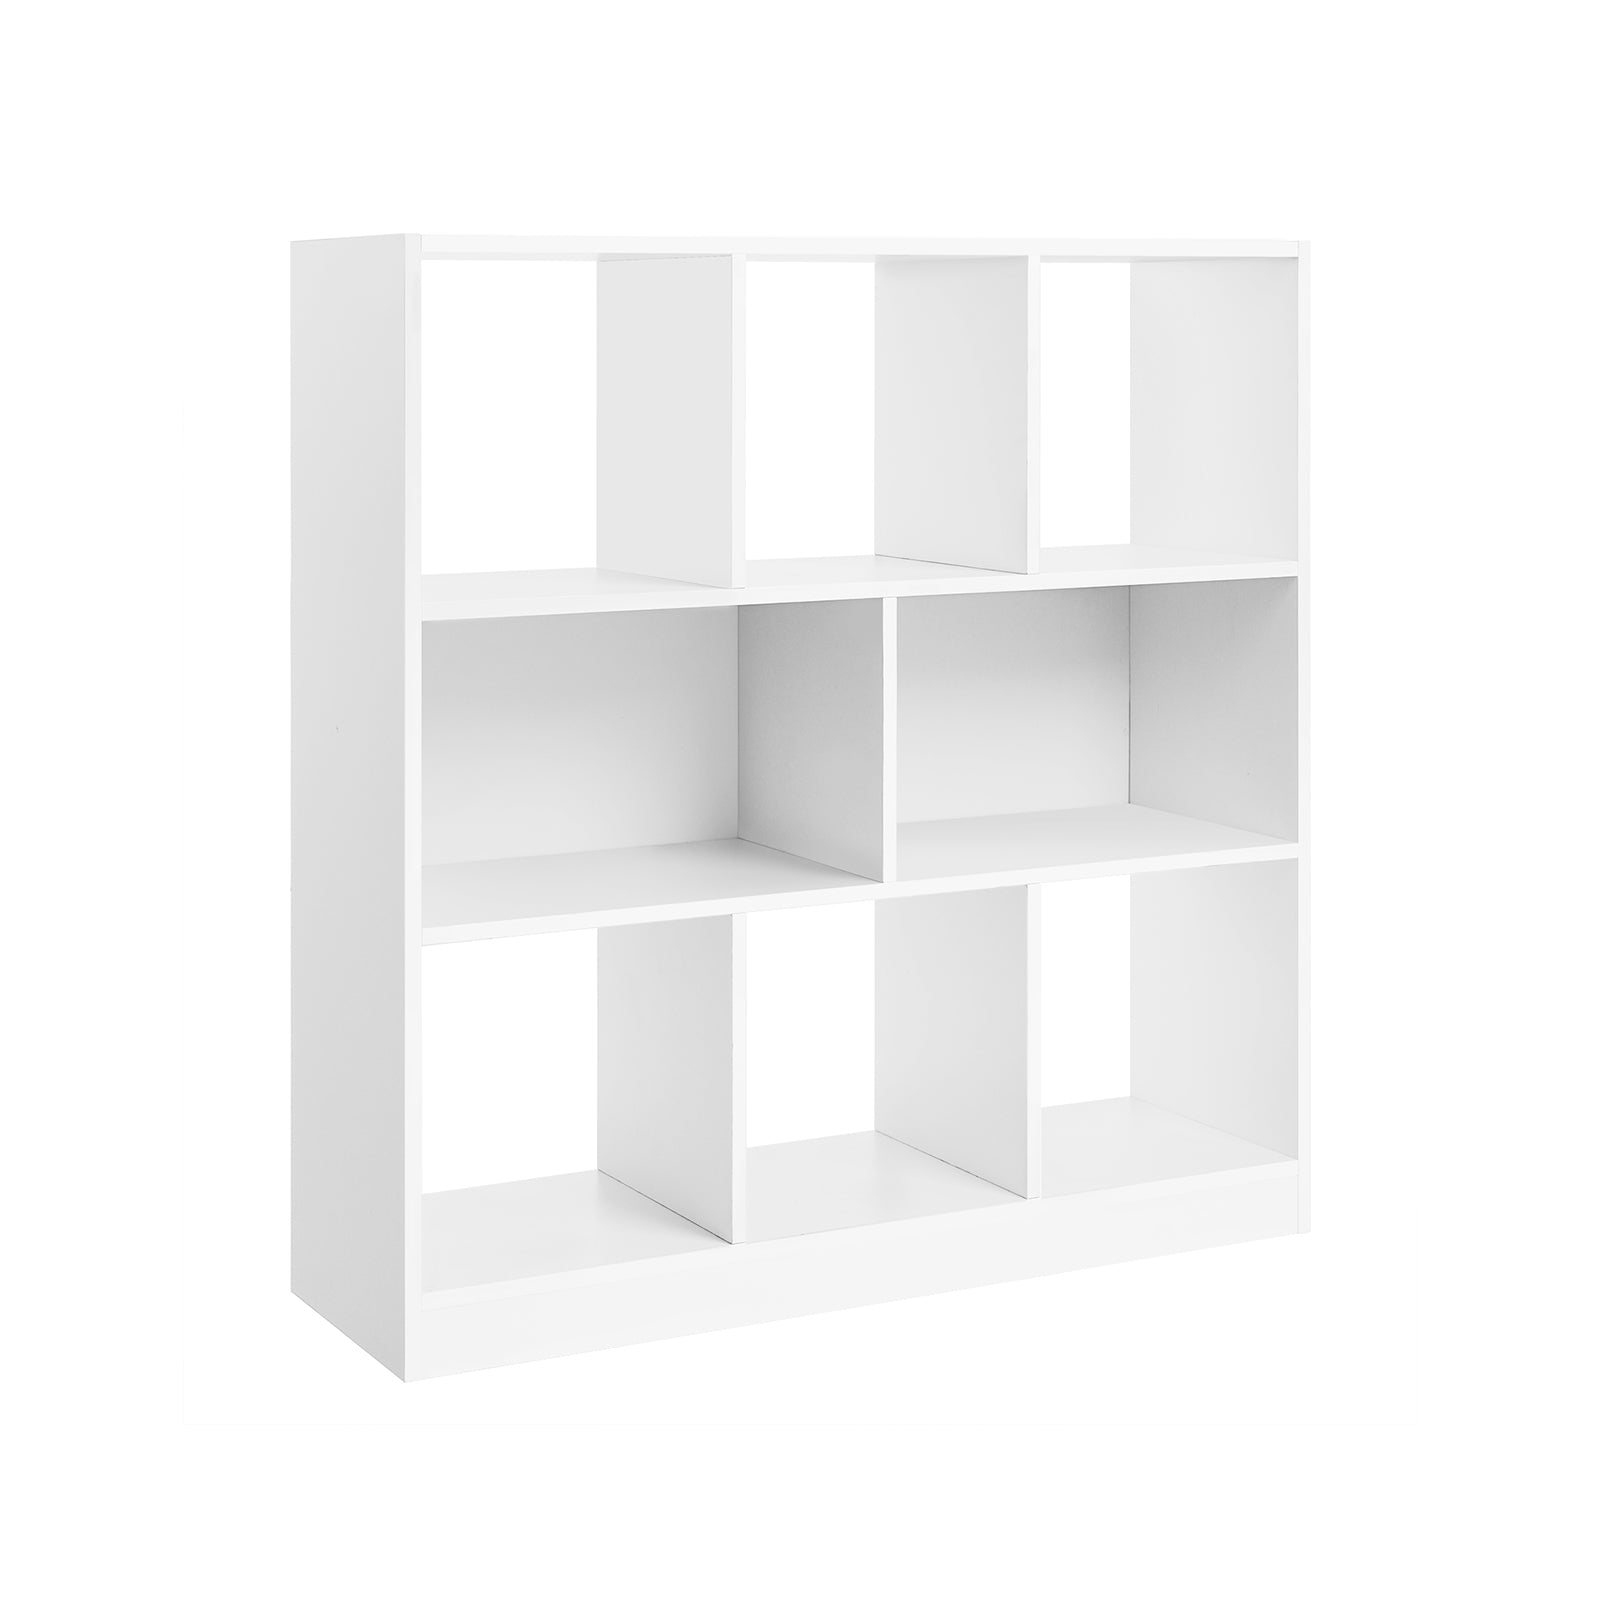 Bücherregal Standregal 97,5 x 100 x 30 cm Weiß